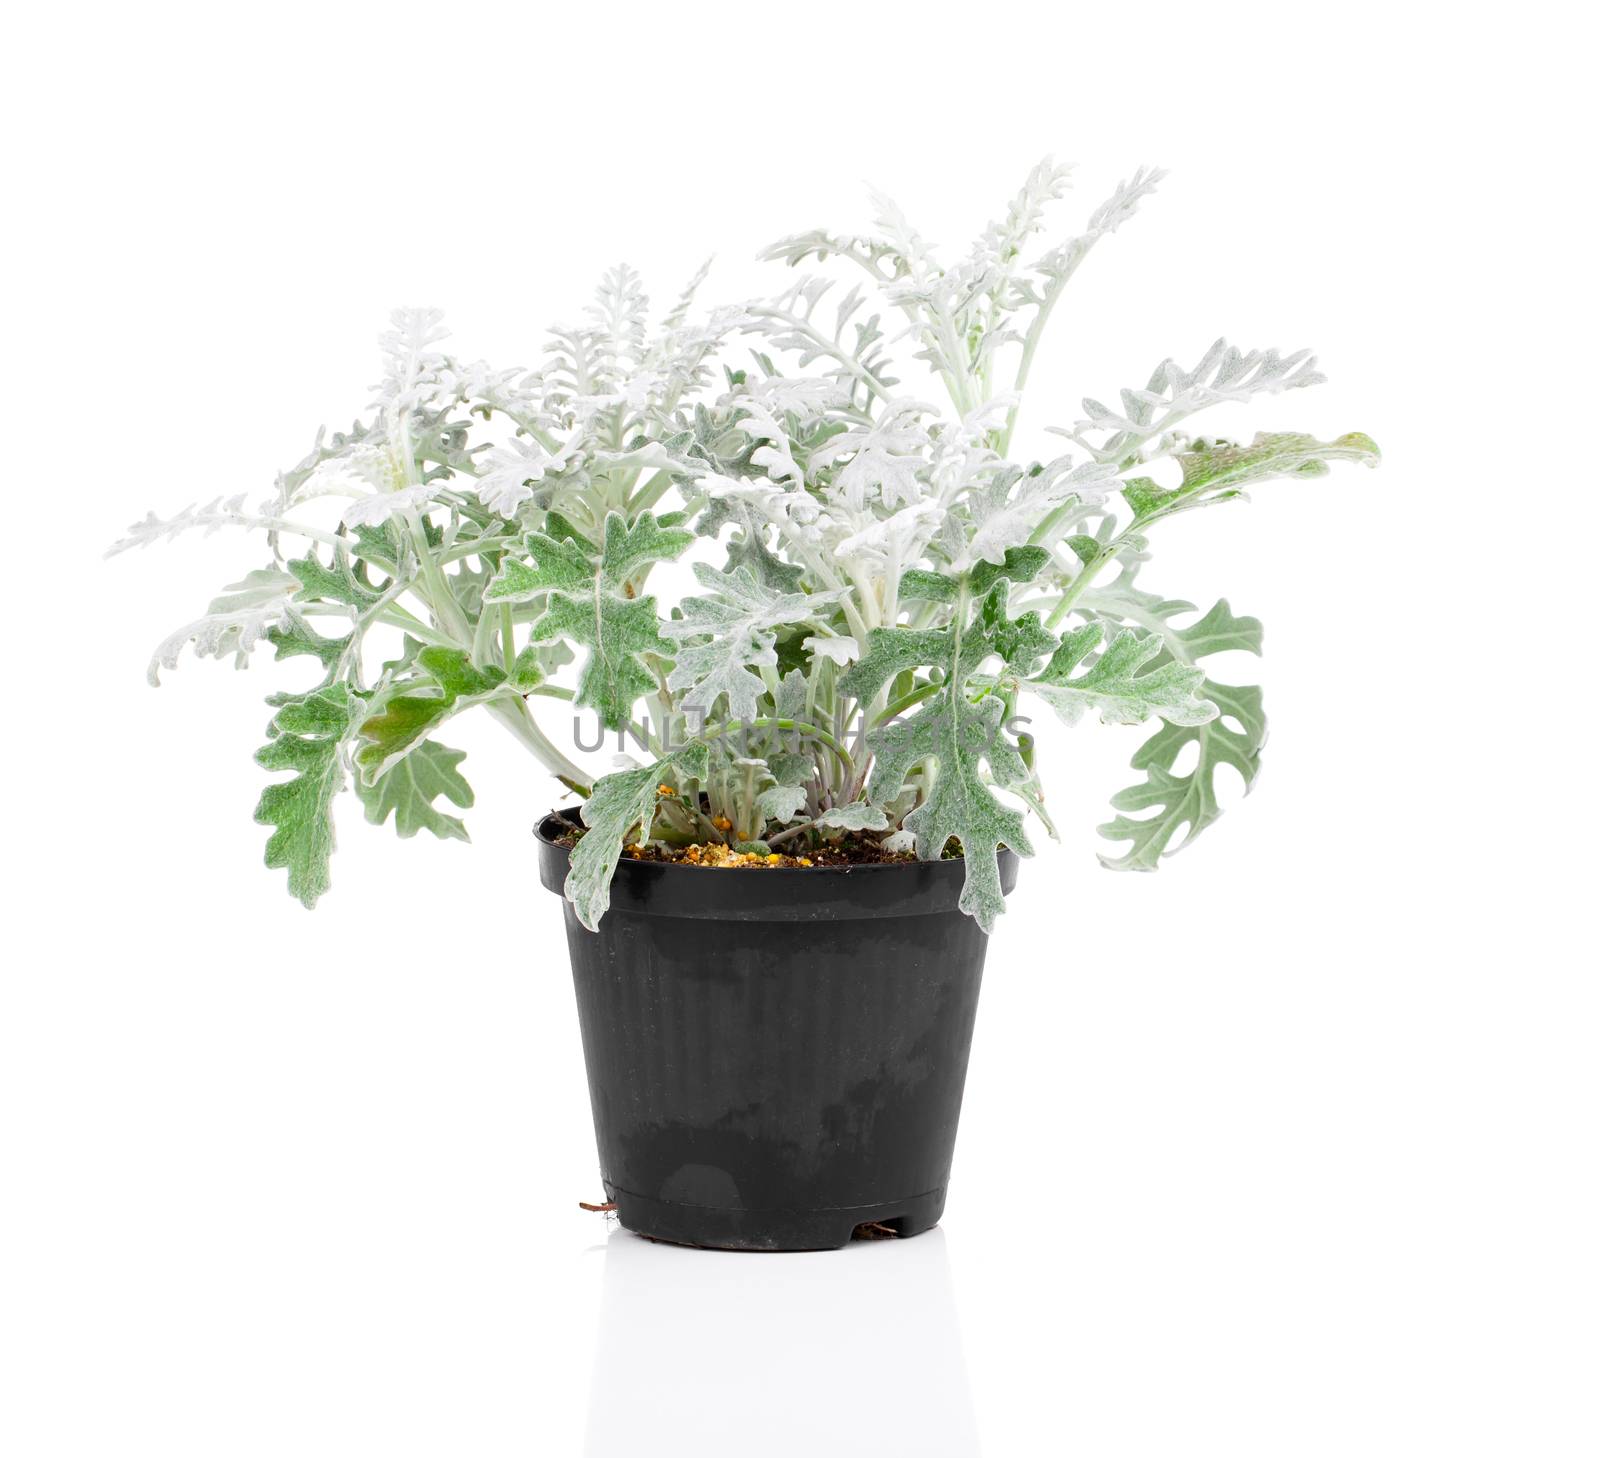 Jacobaea maritima or silver ragwort plant by motorolka